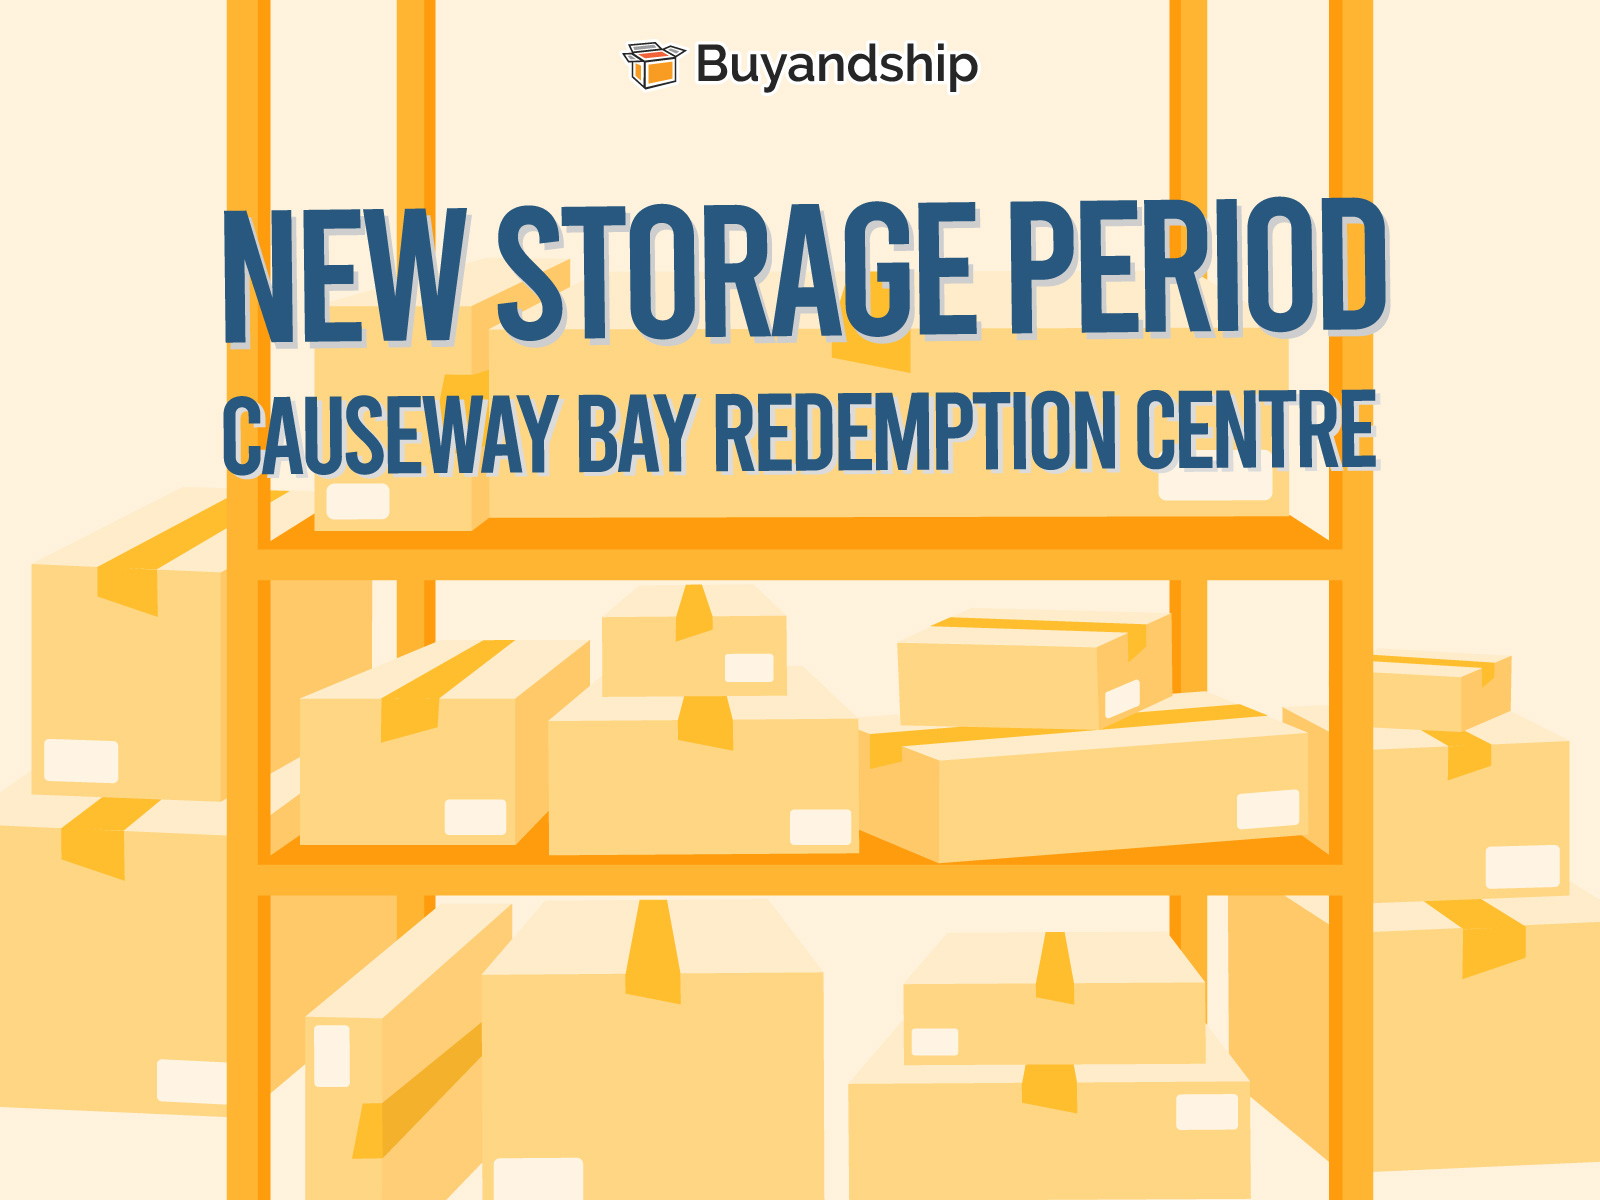 New Storage Period for Causeway Bay Redemption Centre